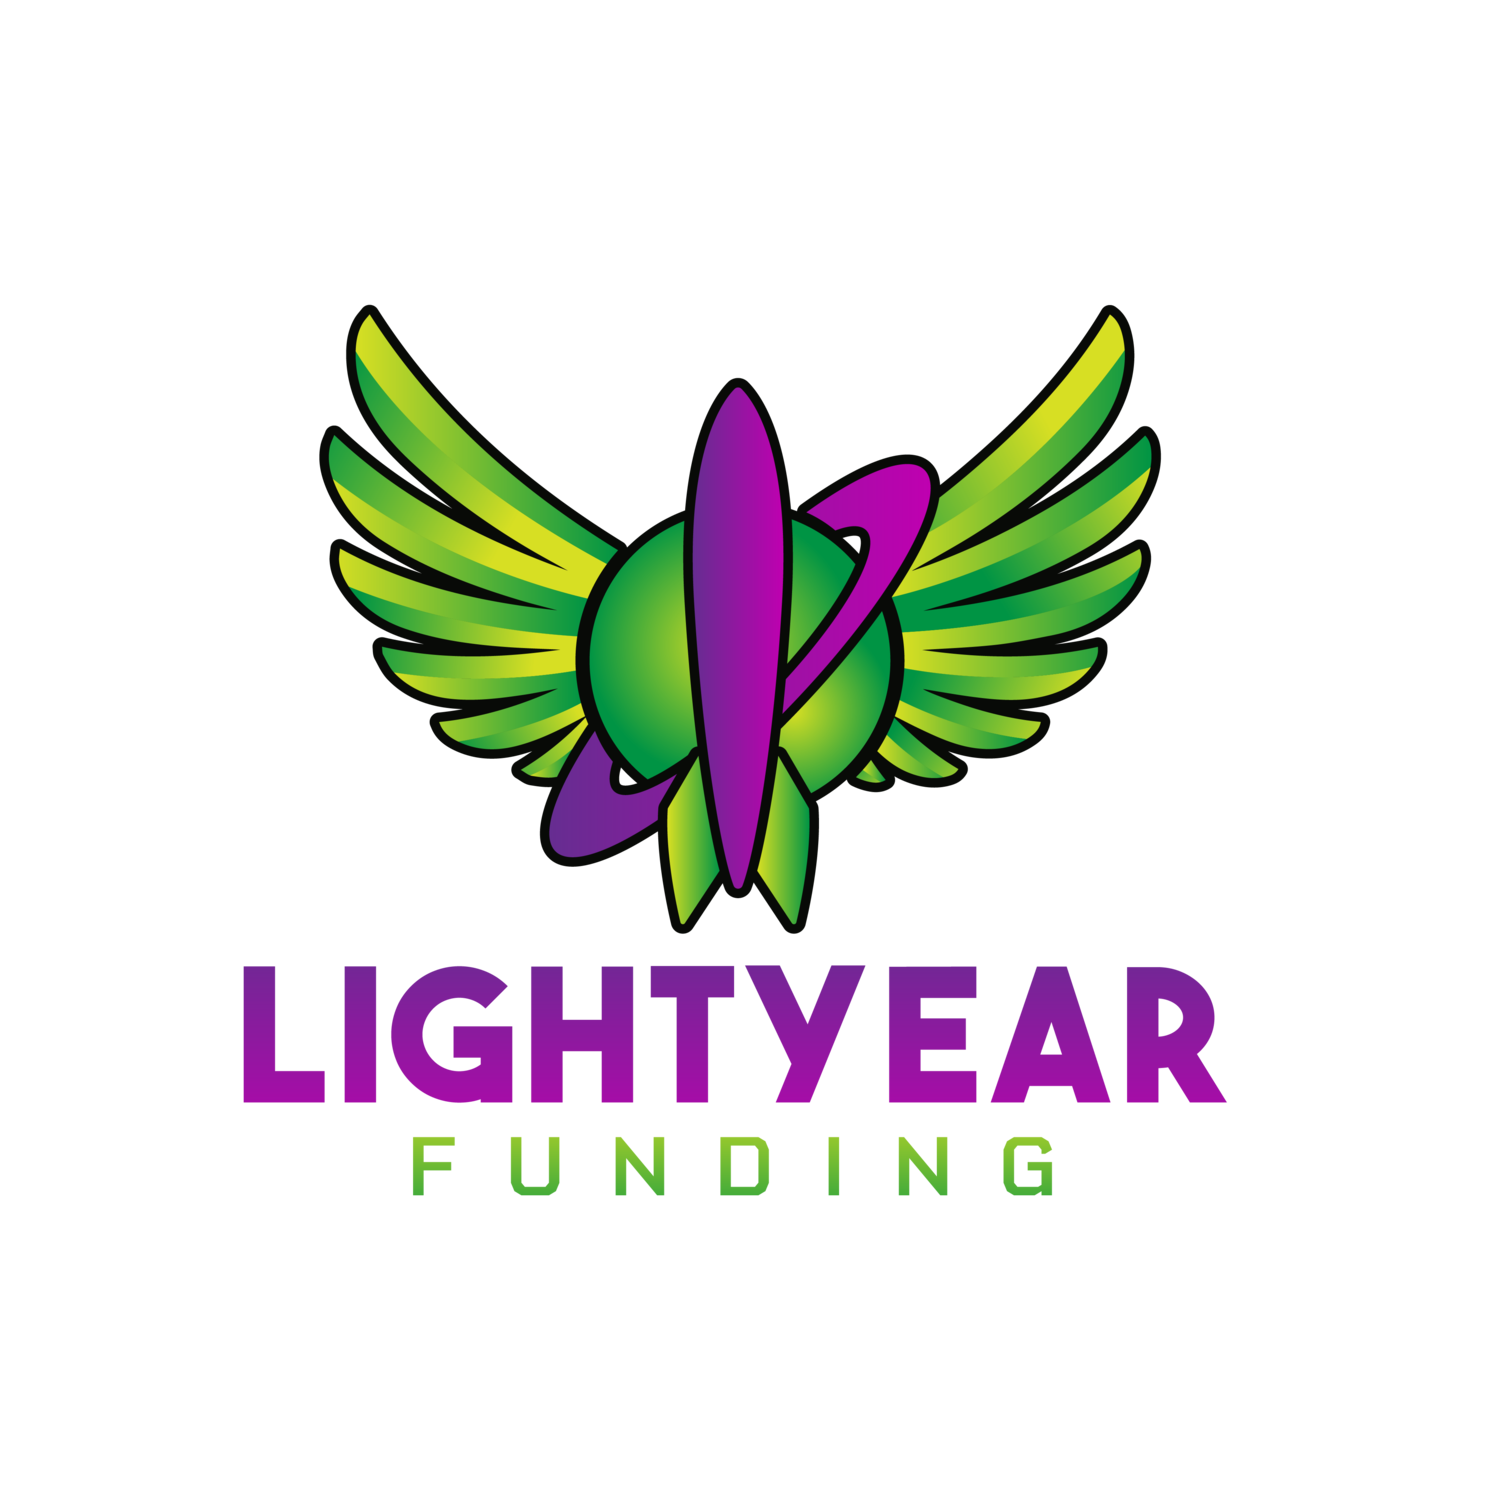 Lightyear Funding